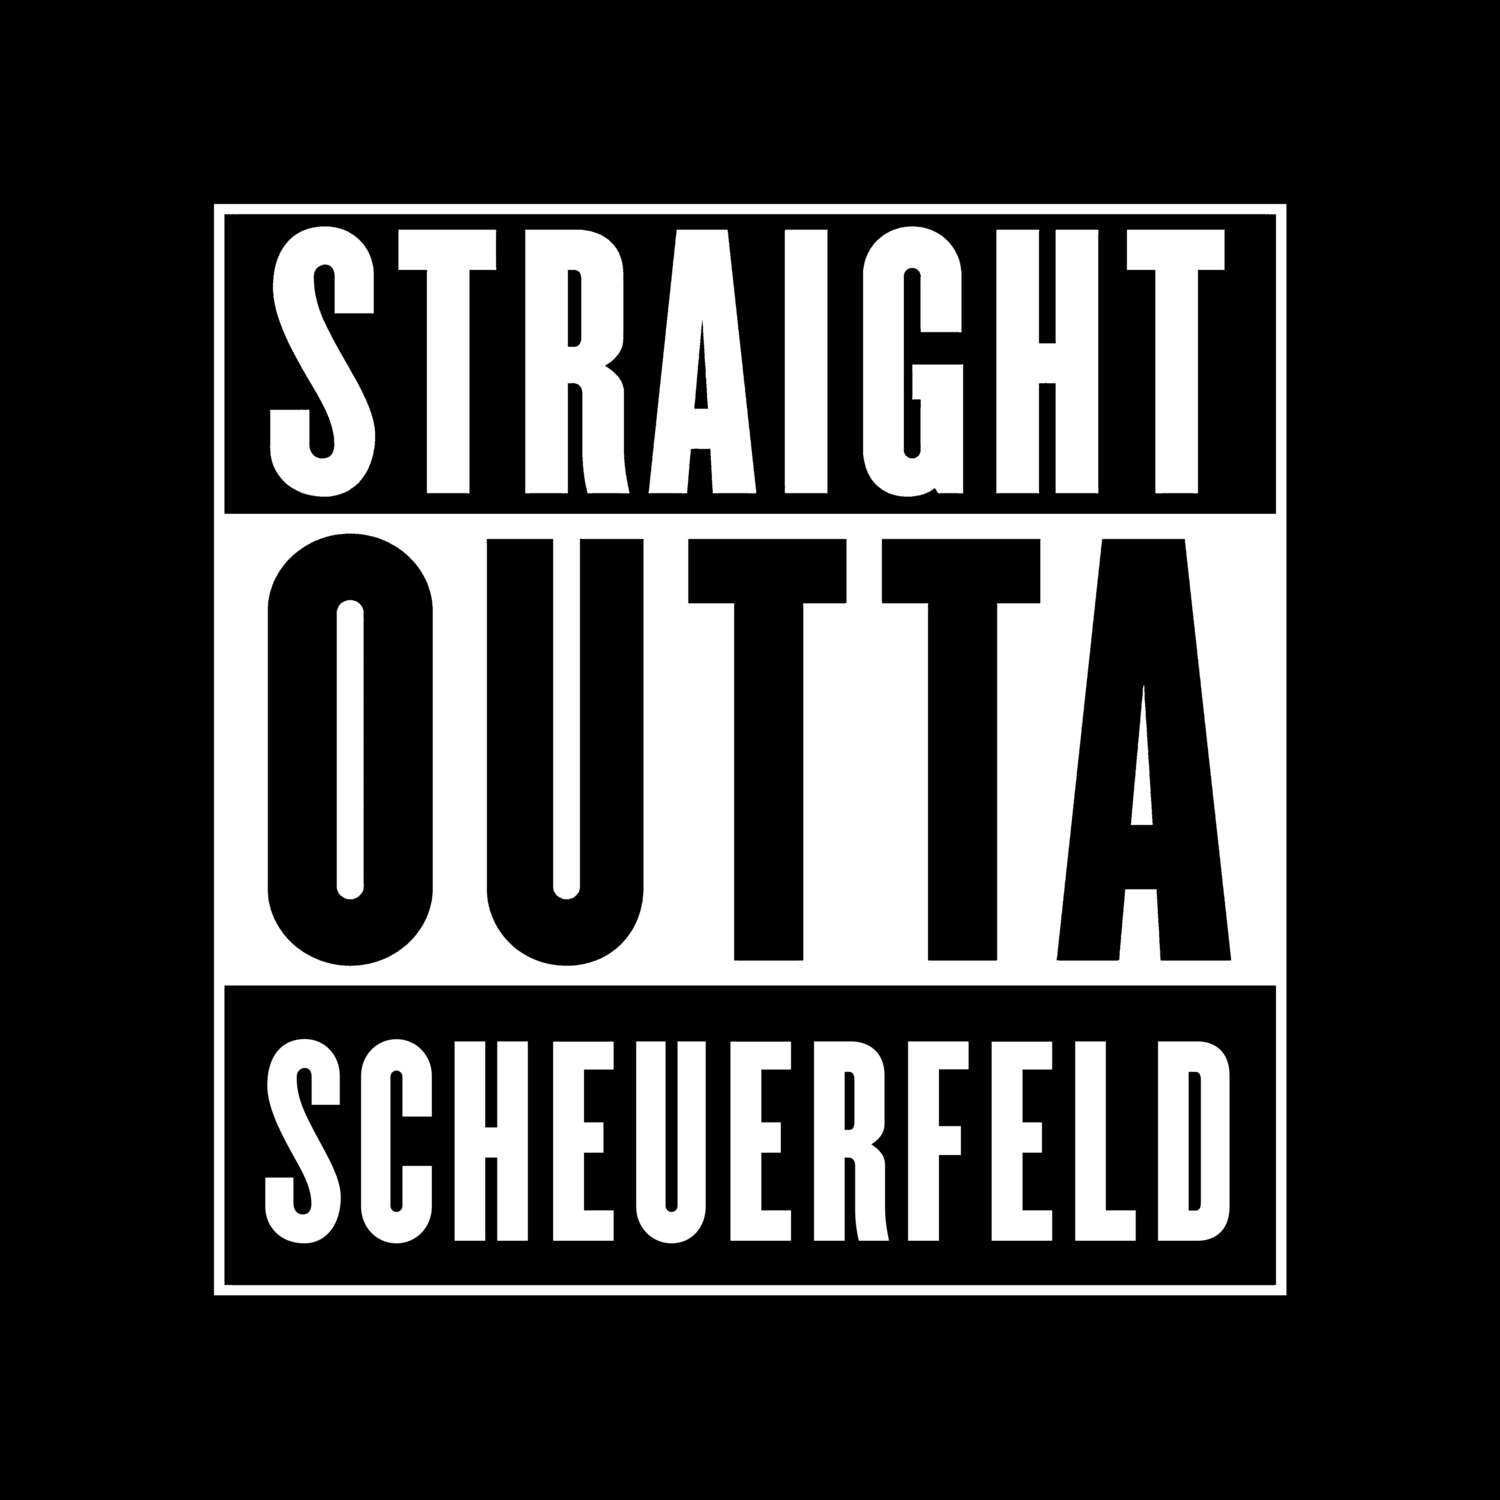 Scheuerfeld T-Shirt »Straight Outta«